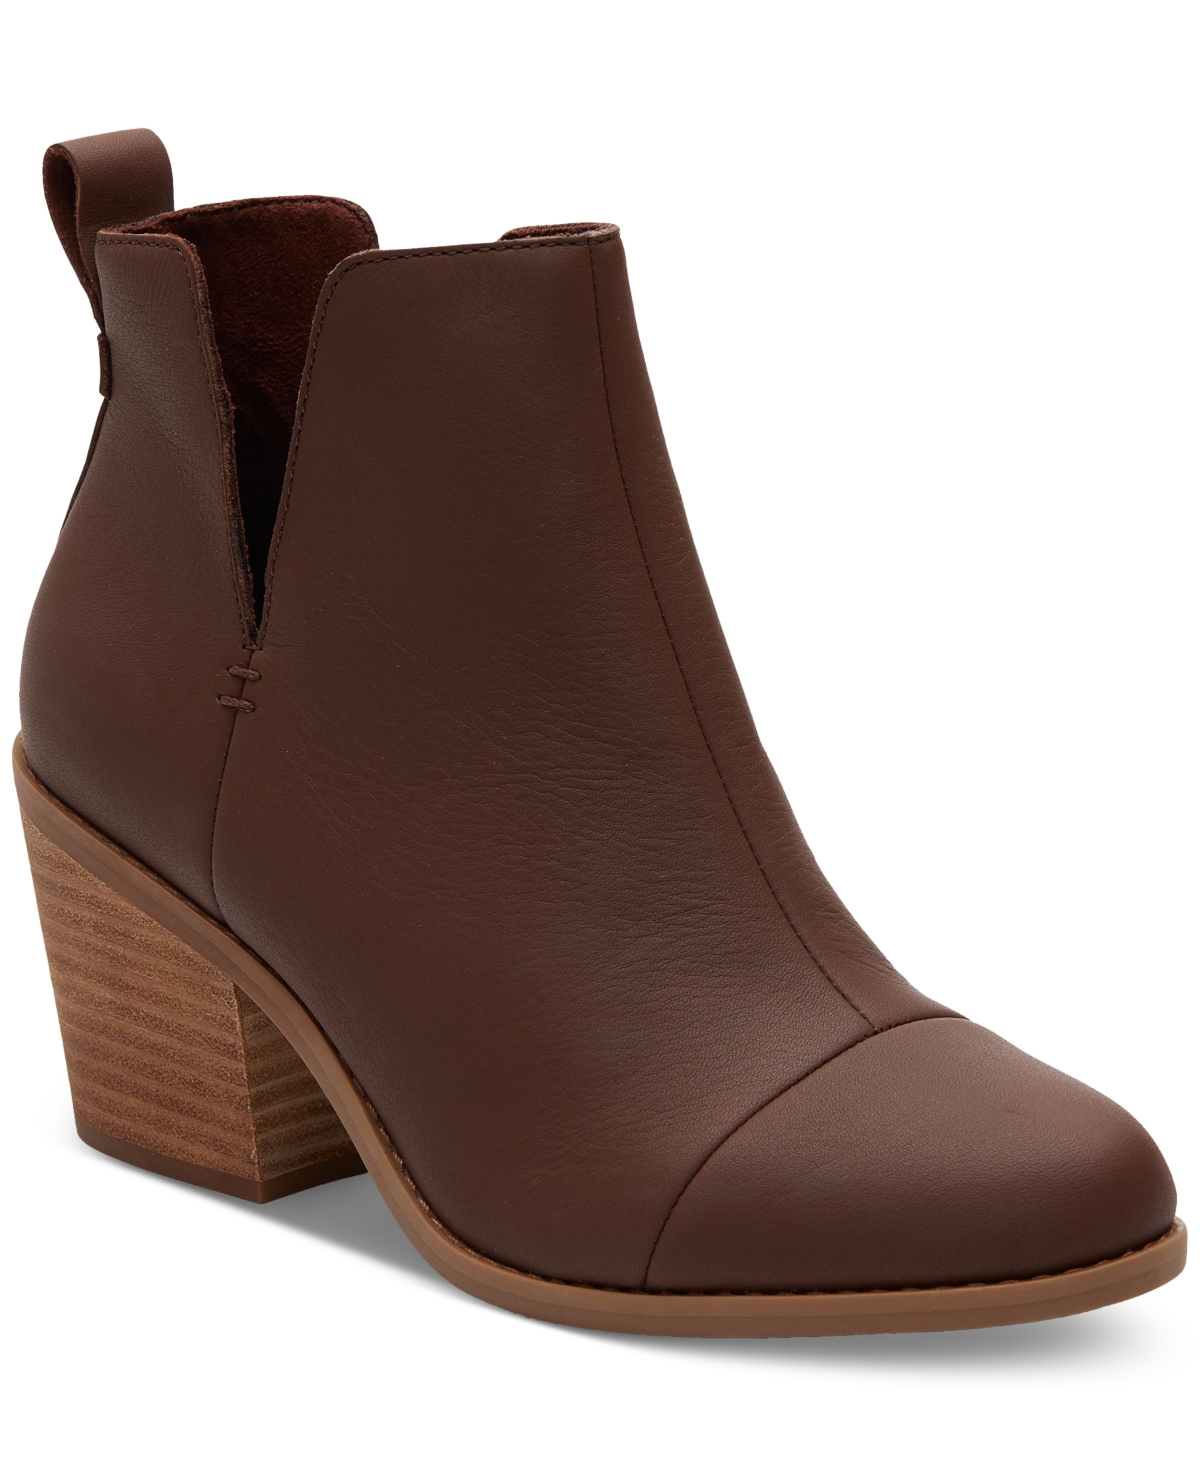 Women's Everly Cutout Block Heel Booties - Chestnut Leather